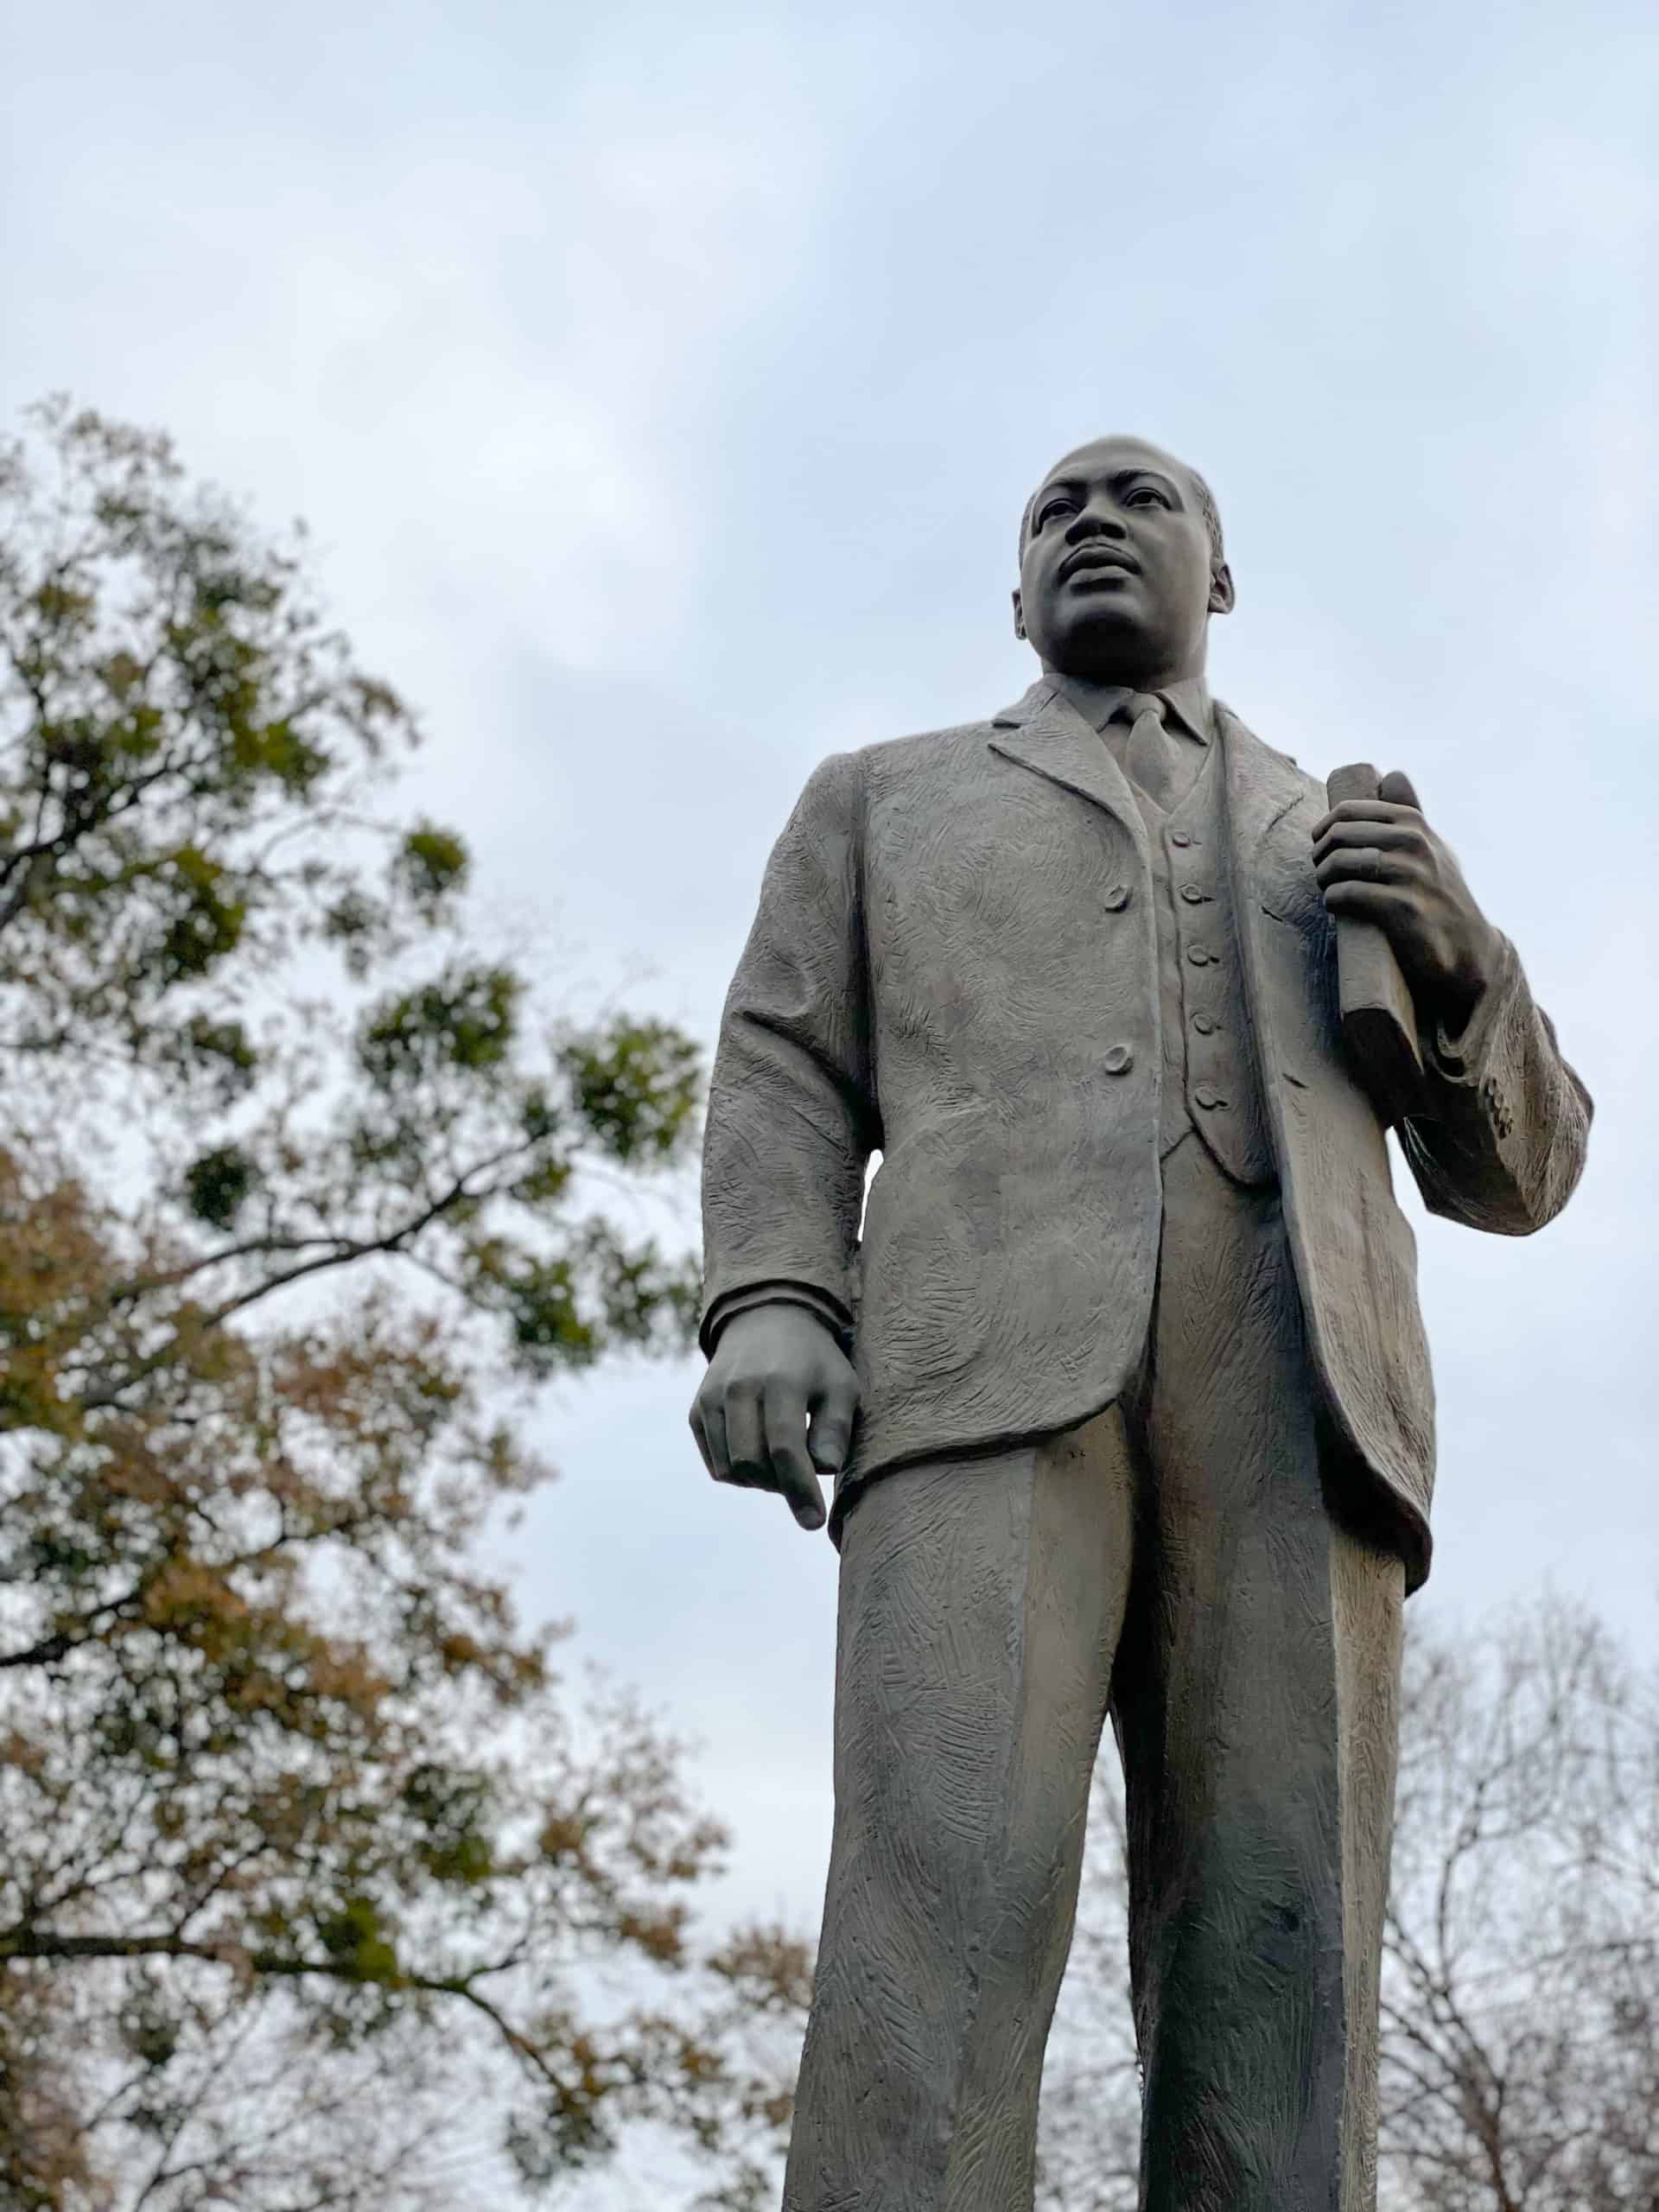 USA - Alabama Road Trip - Birmingham - Kelly Ingram Park - Statue of Dr Martin Luther King Jr